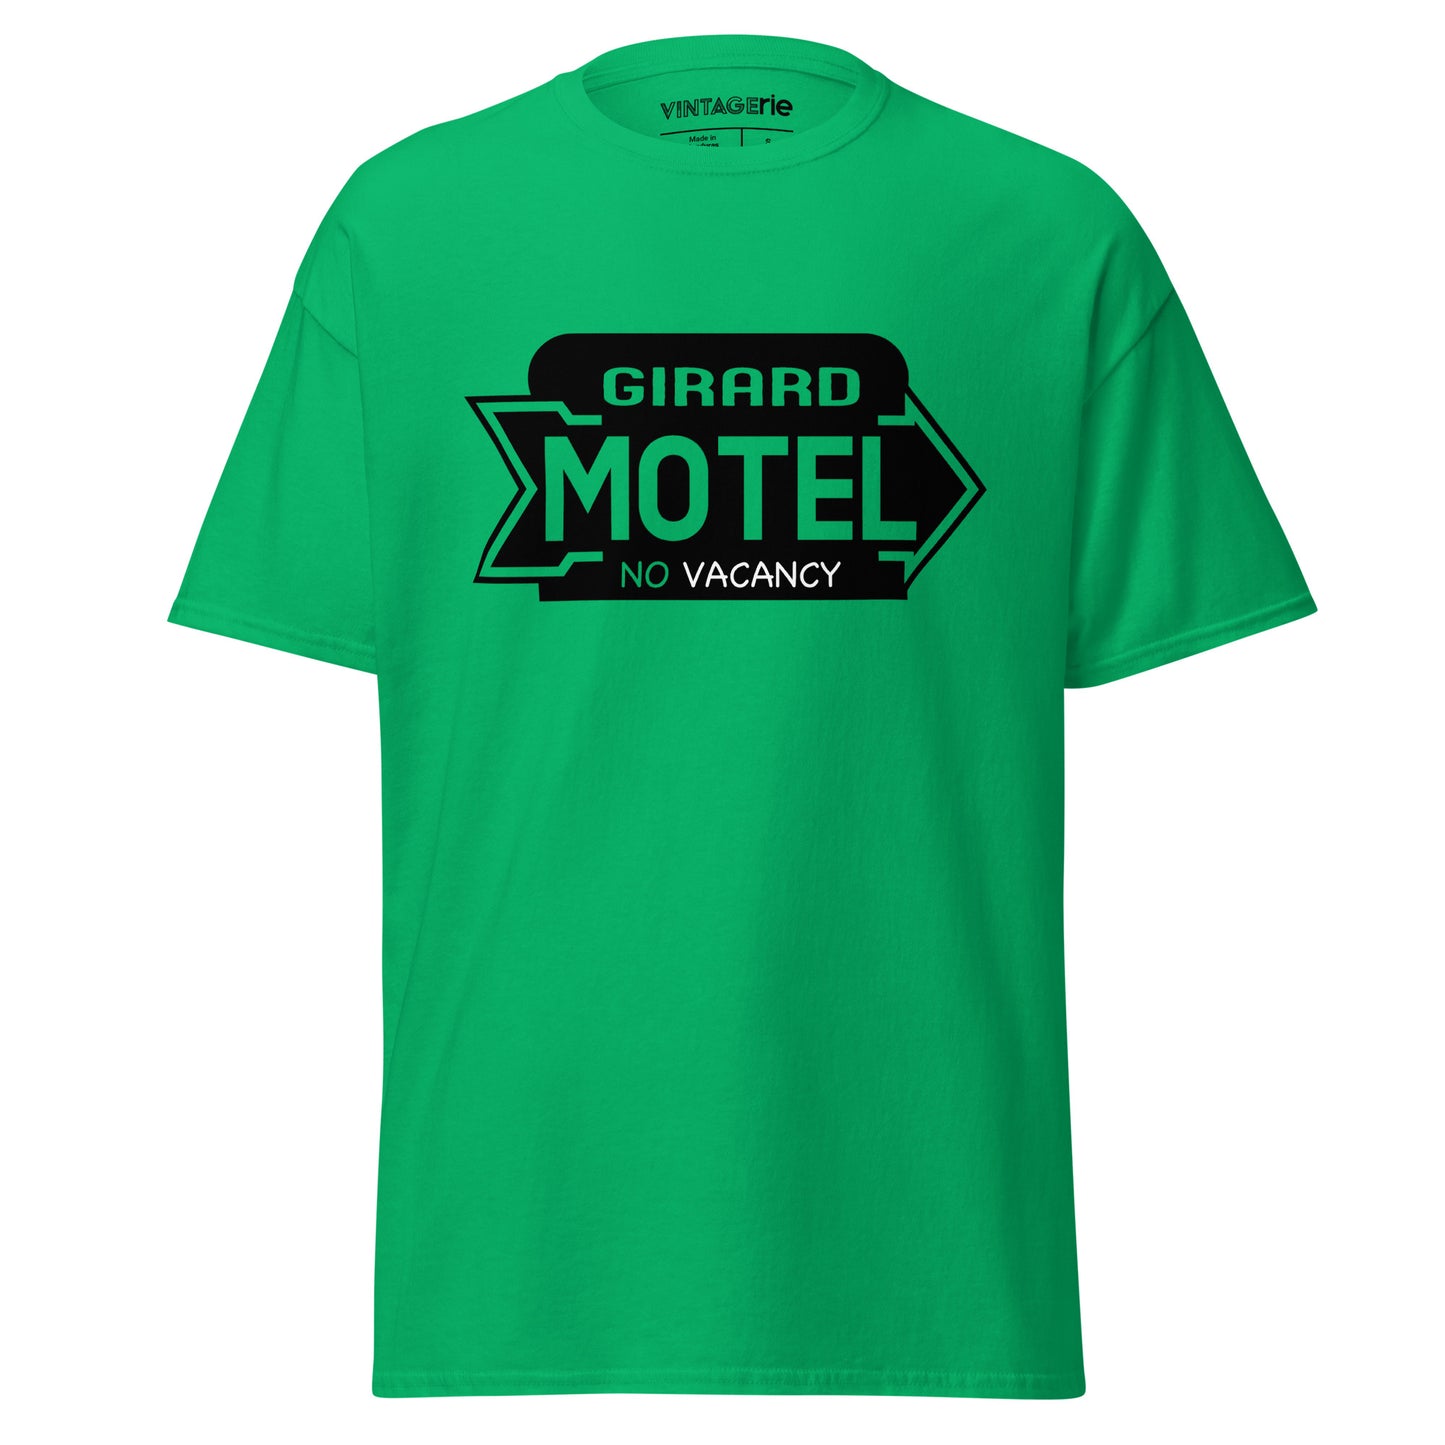 Girard Motel Classic Unisex Tee